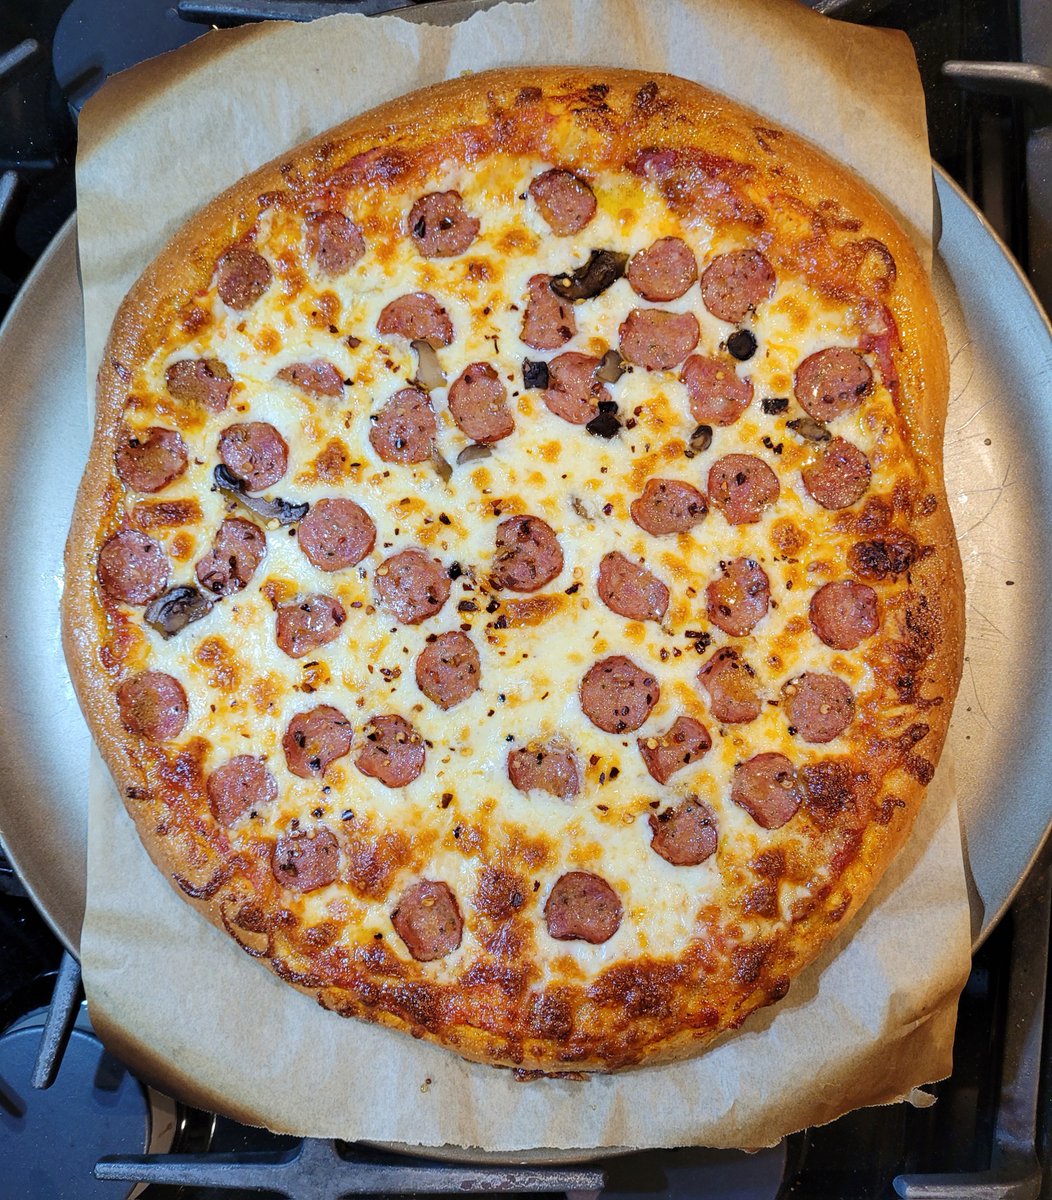 #saturdaynight #pizzanight #cheesy #mozzarella #sausage #mushrooms #redpepperflakes featuring #chewy flavored crust (evoo, chili/garlic powder, salt) #food #foodie #makeityourself #pizza